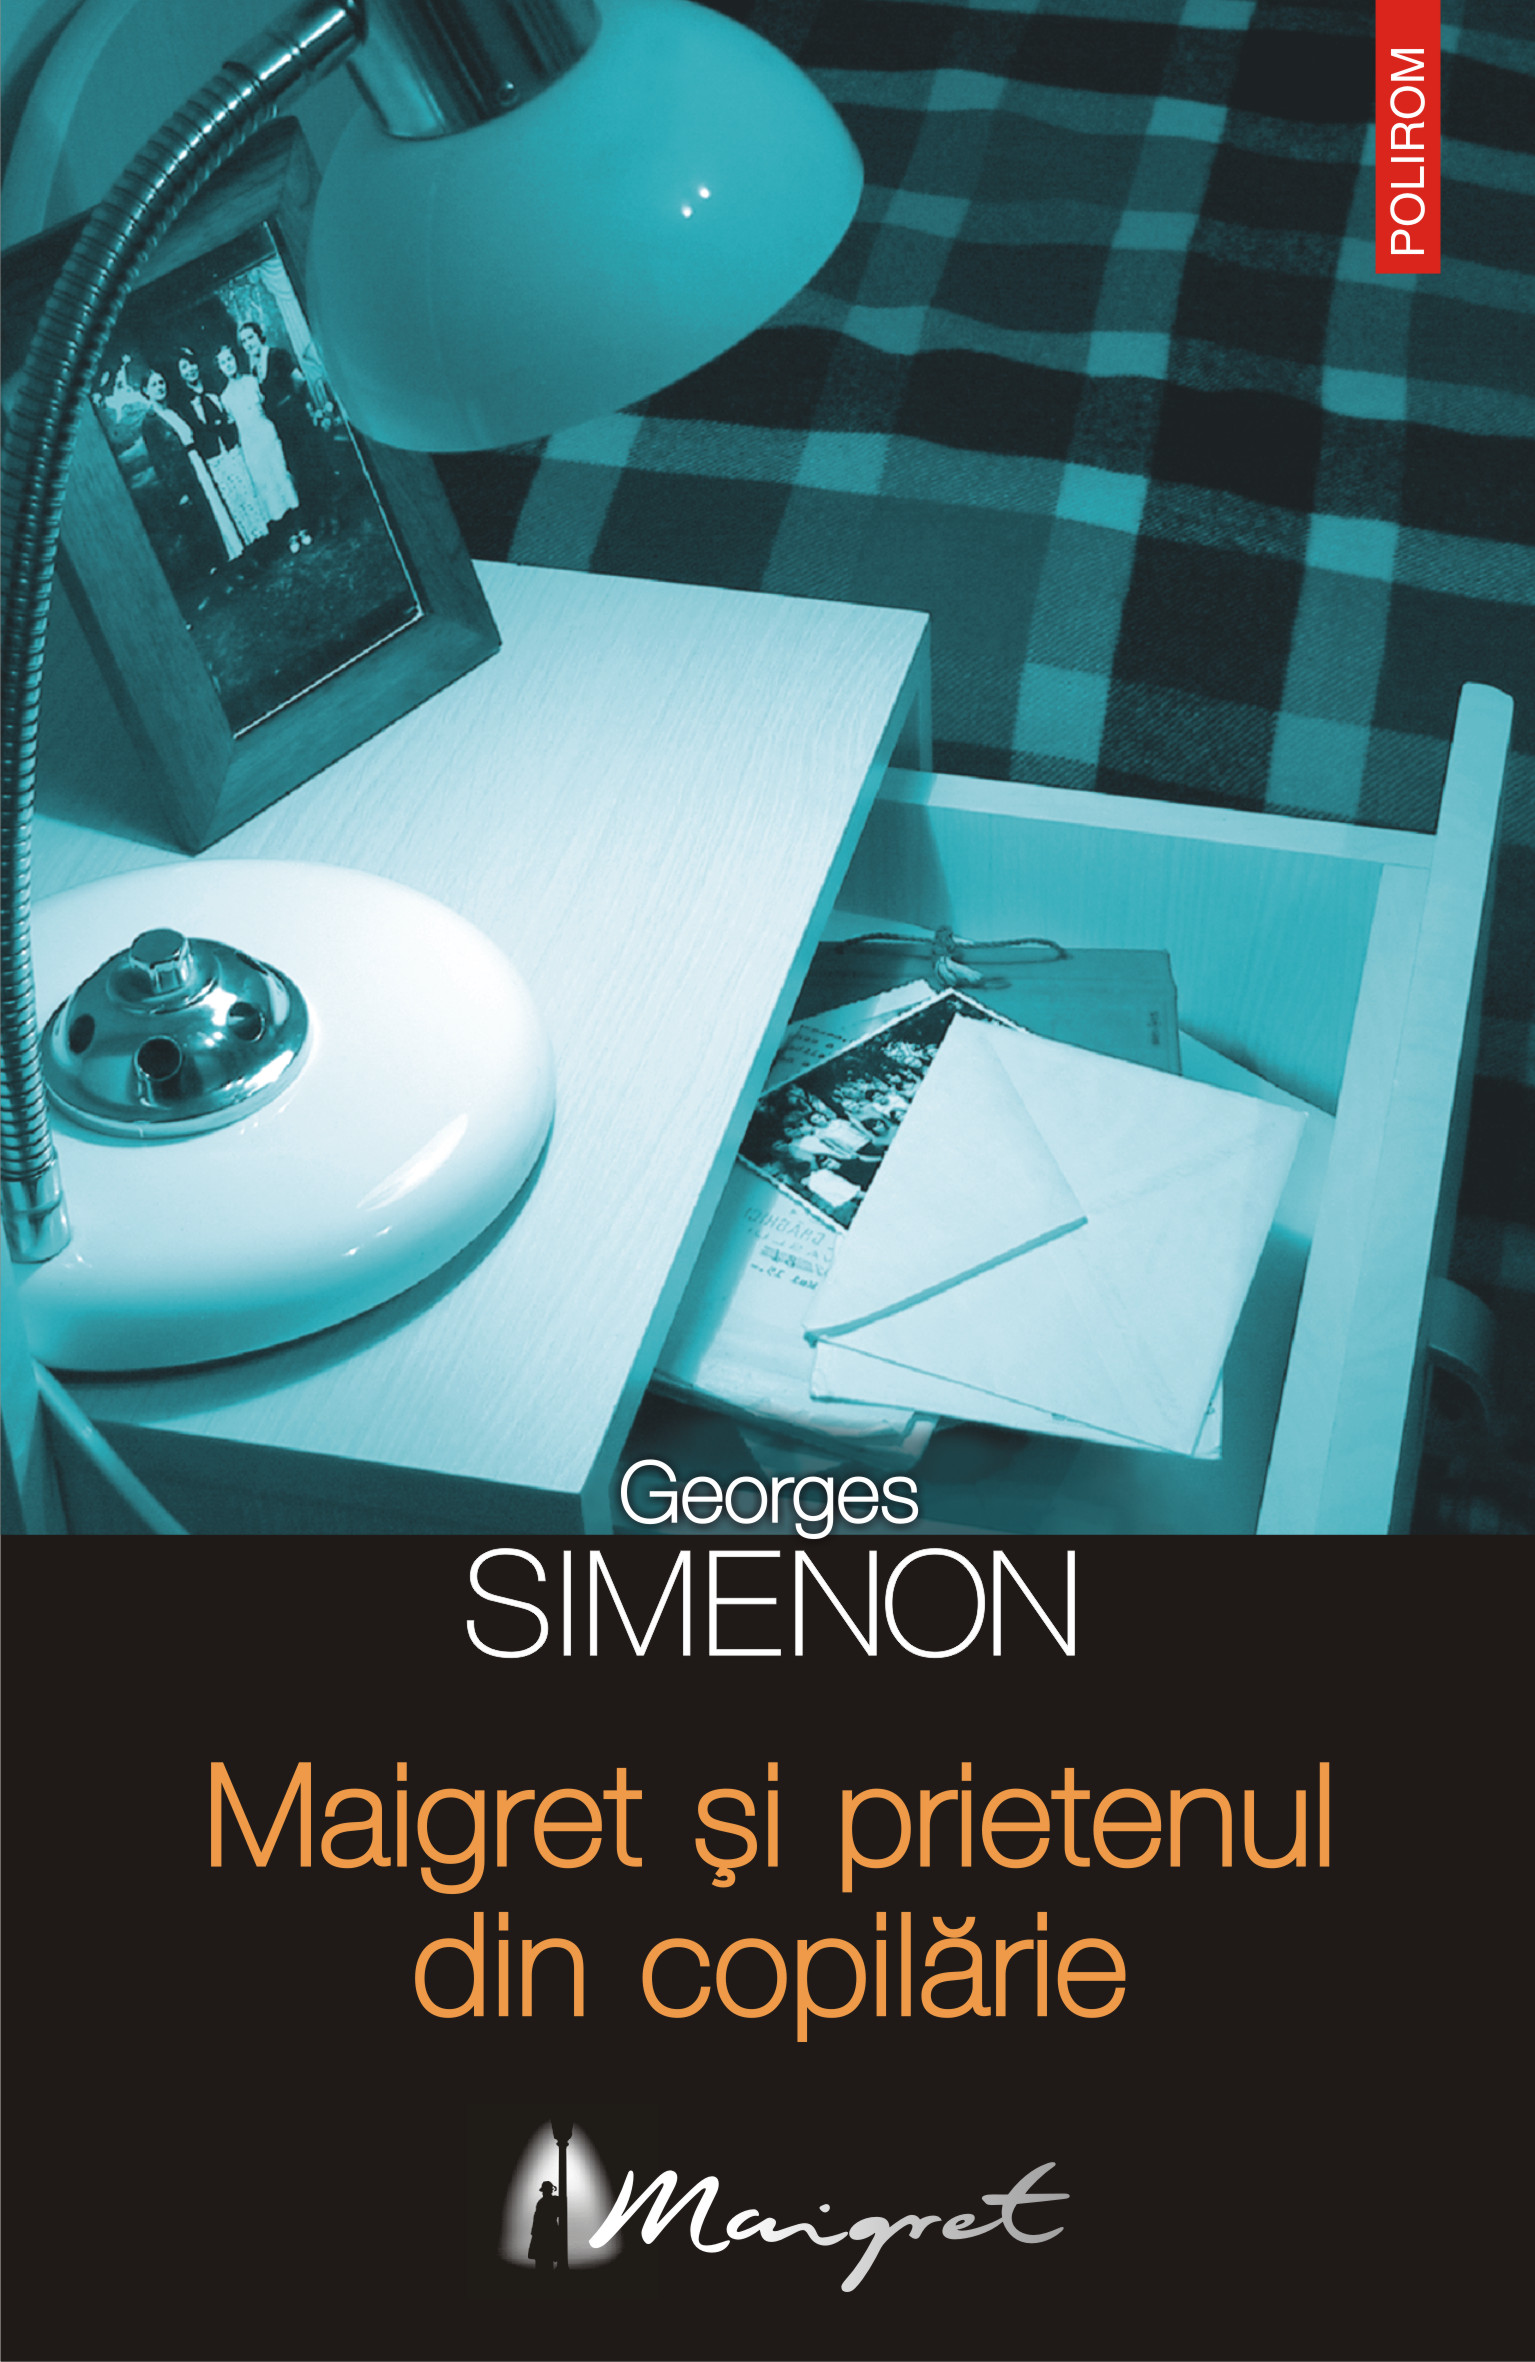 eBook Maigret si prietenul din copilarie - Georges Simenon